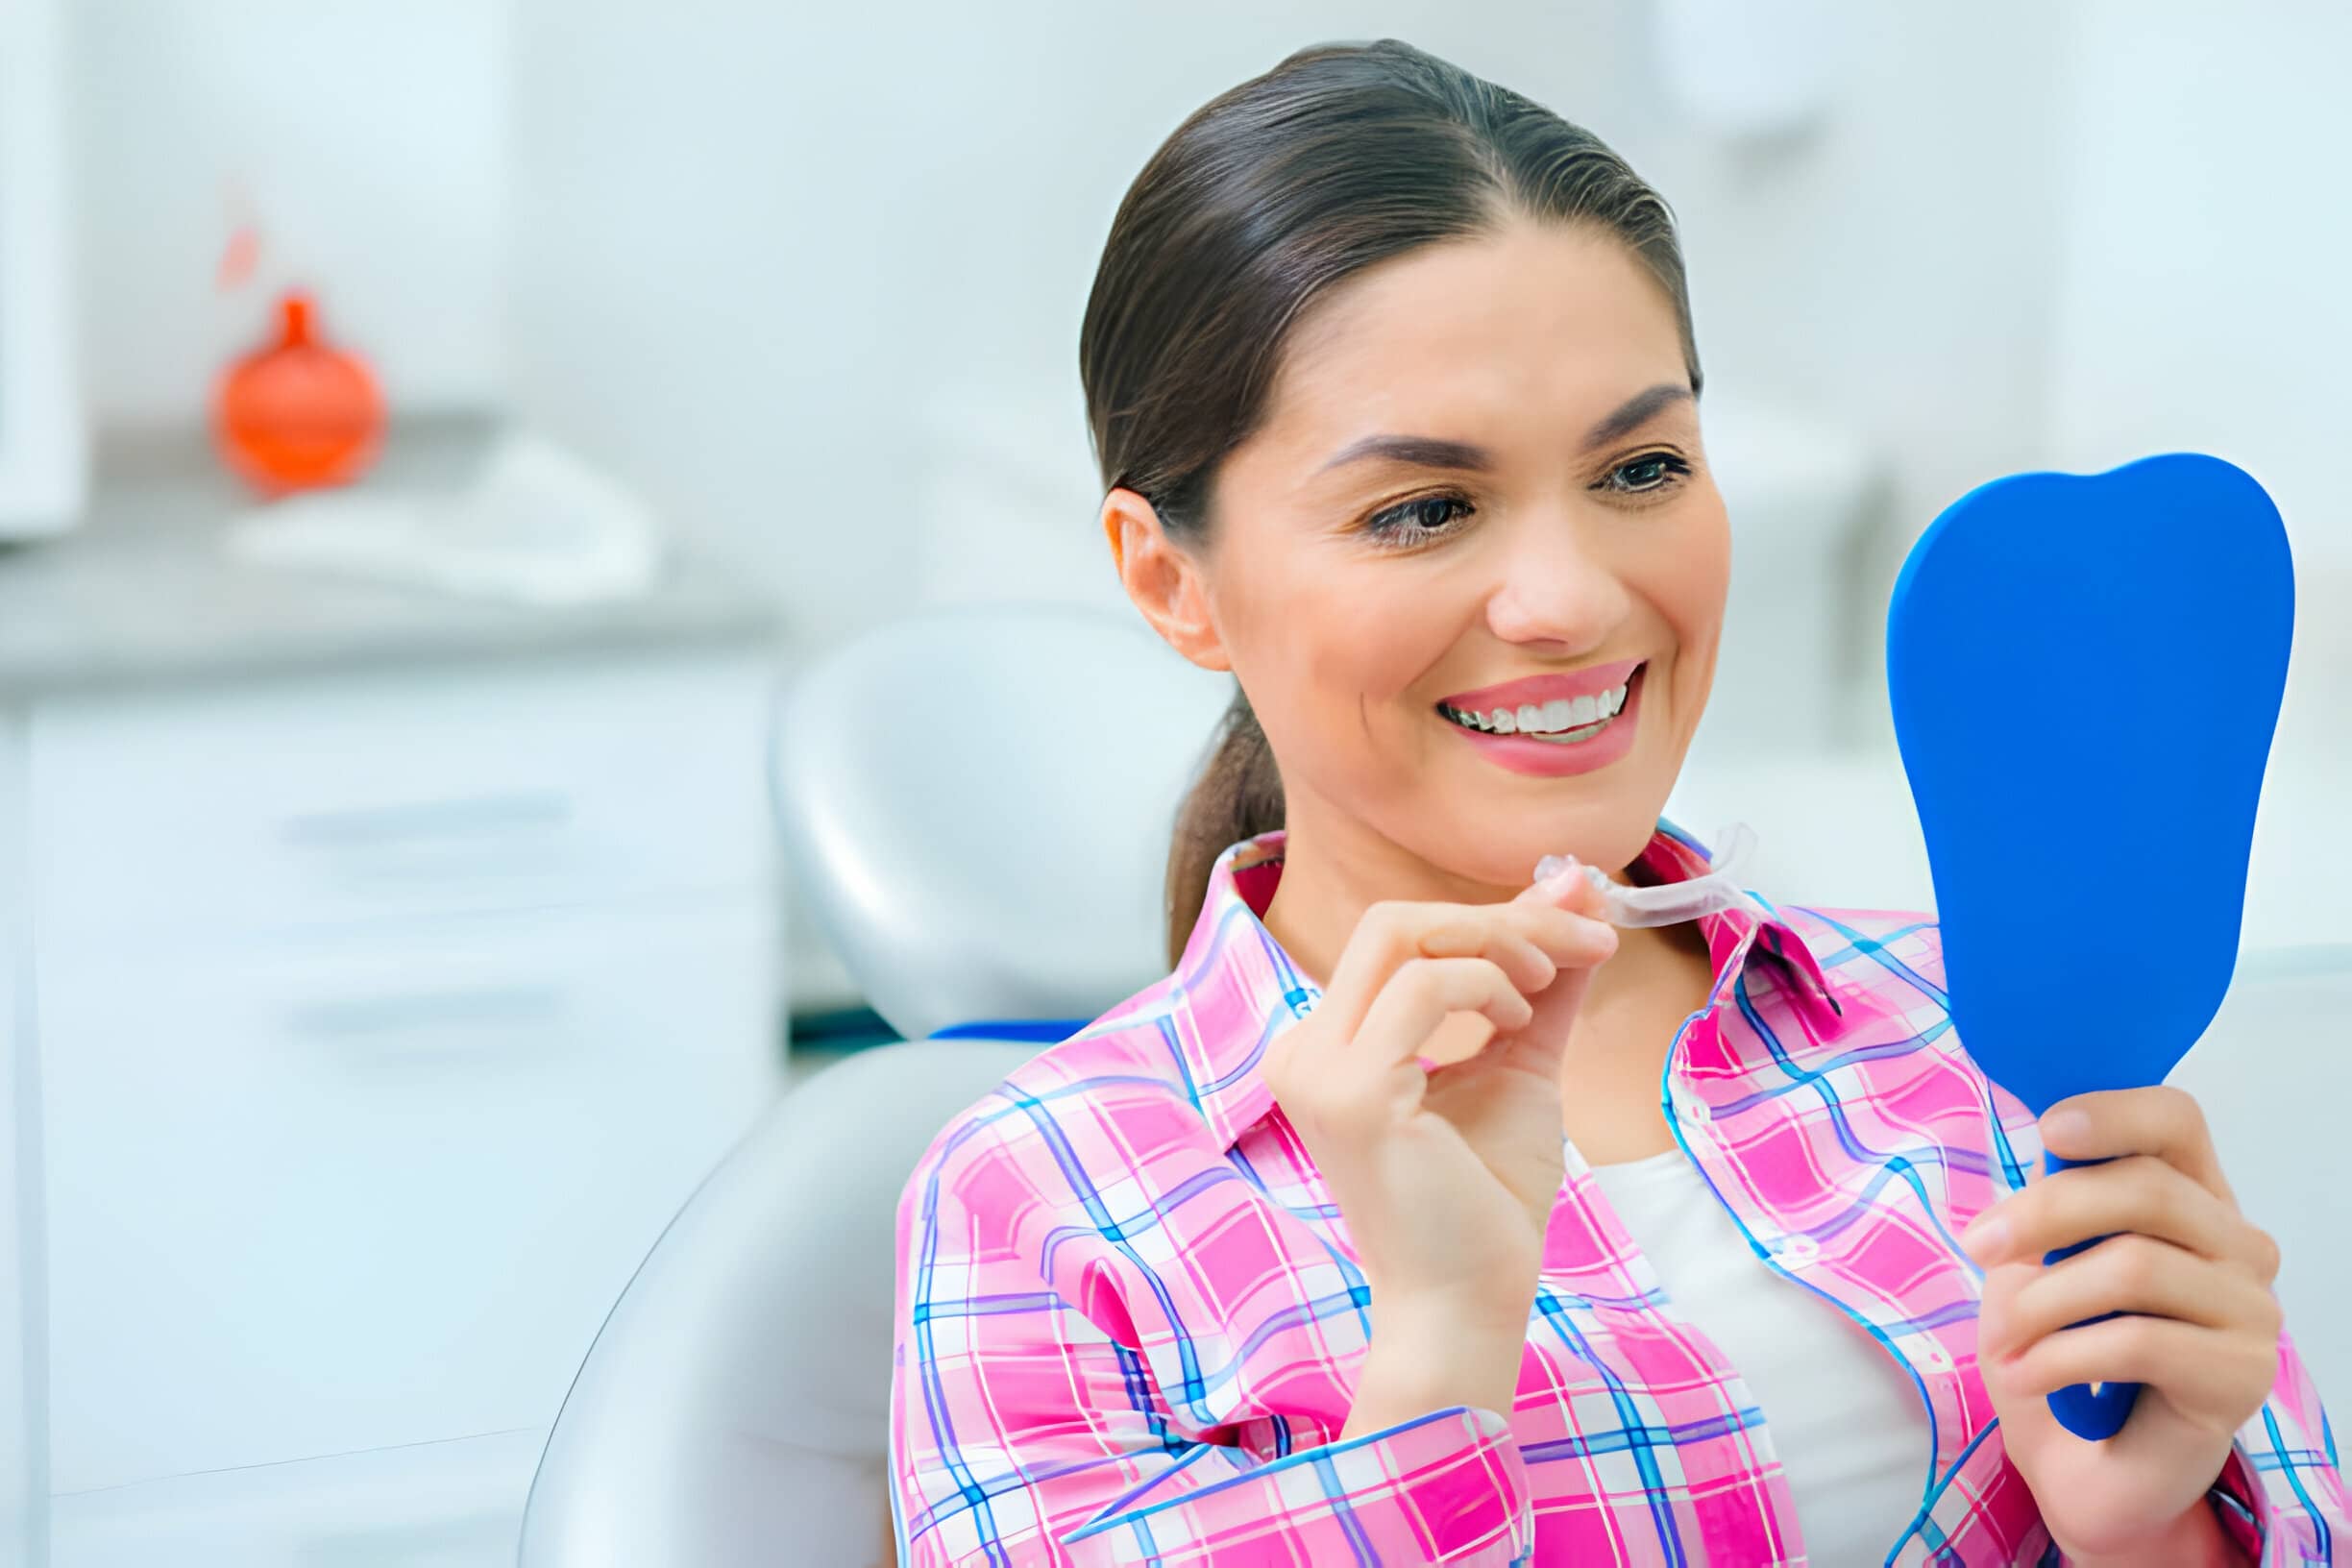 Discover Radiant Smiles Through Restorative Dentistry